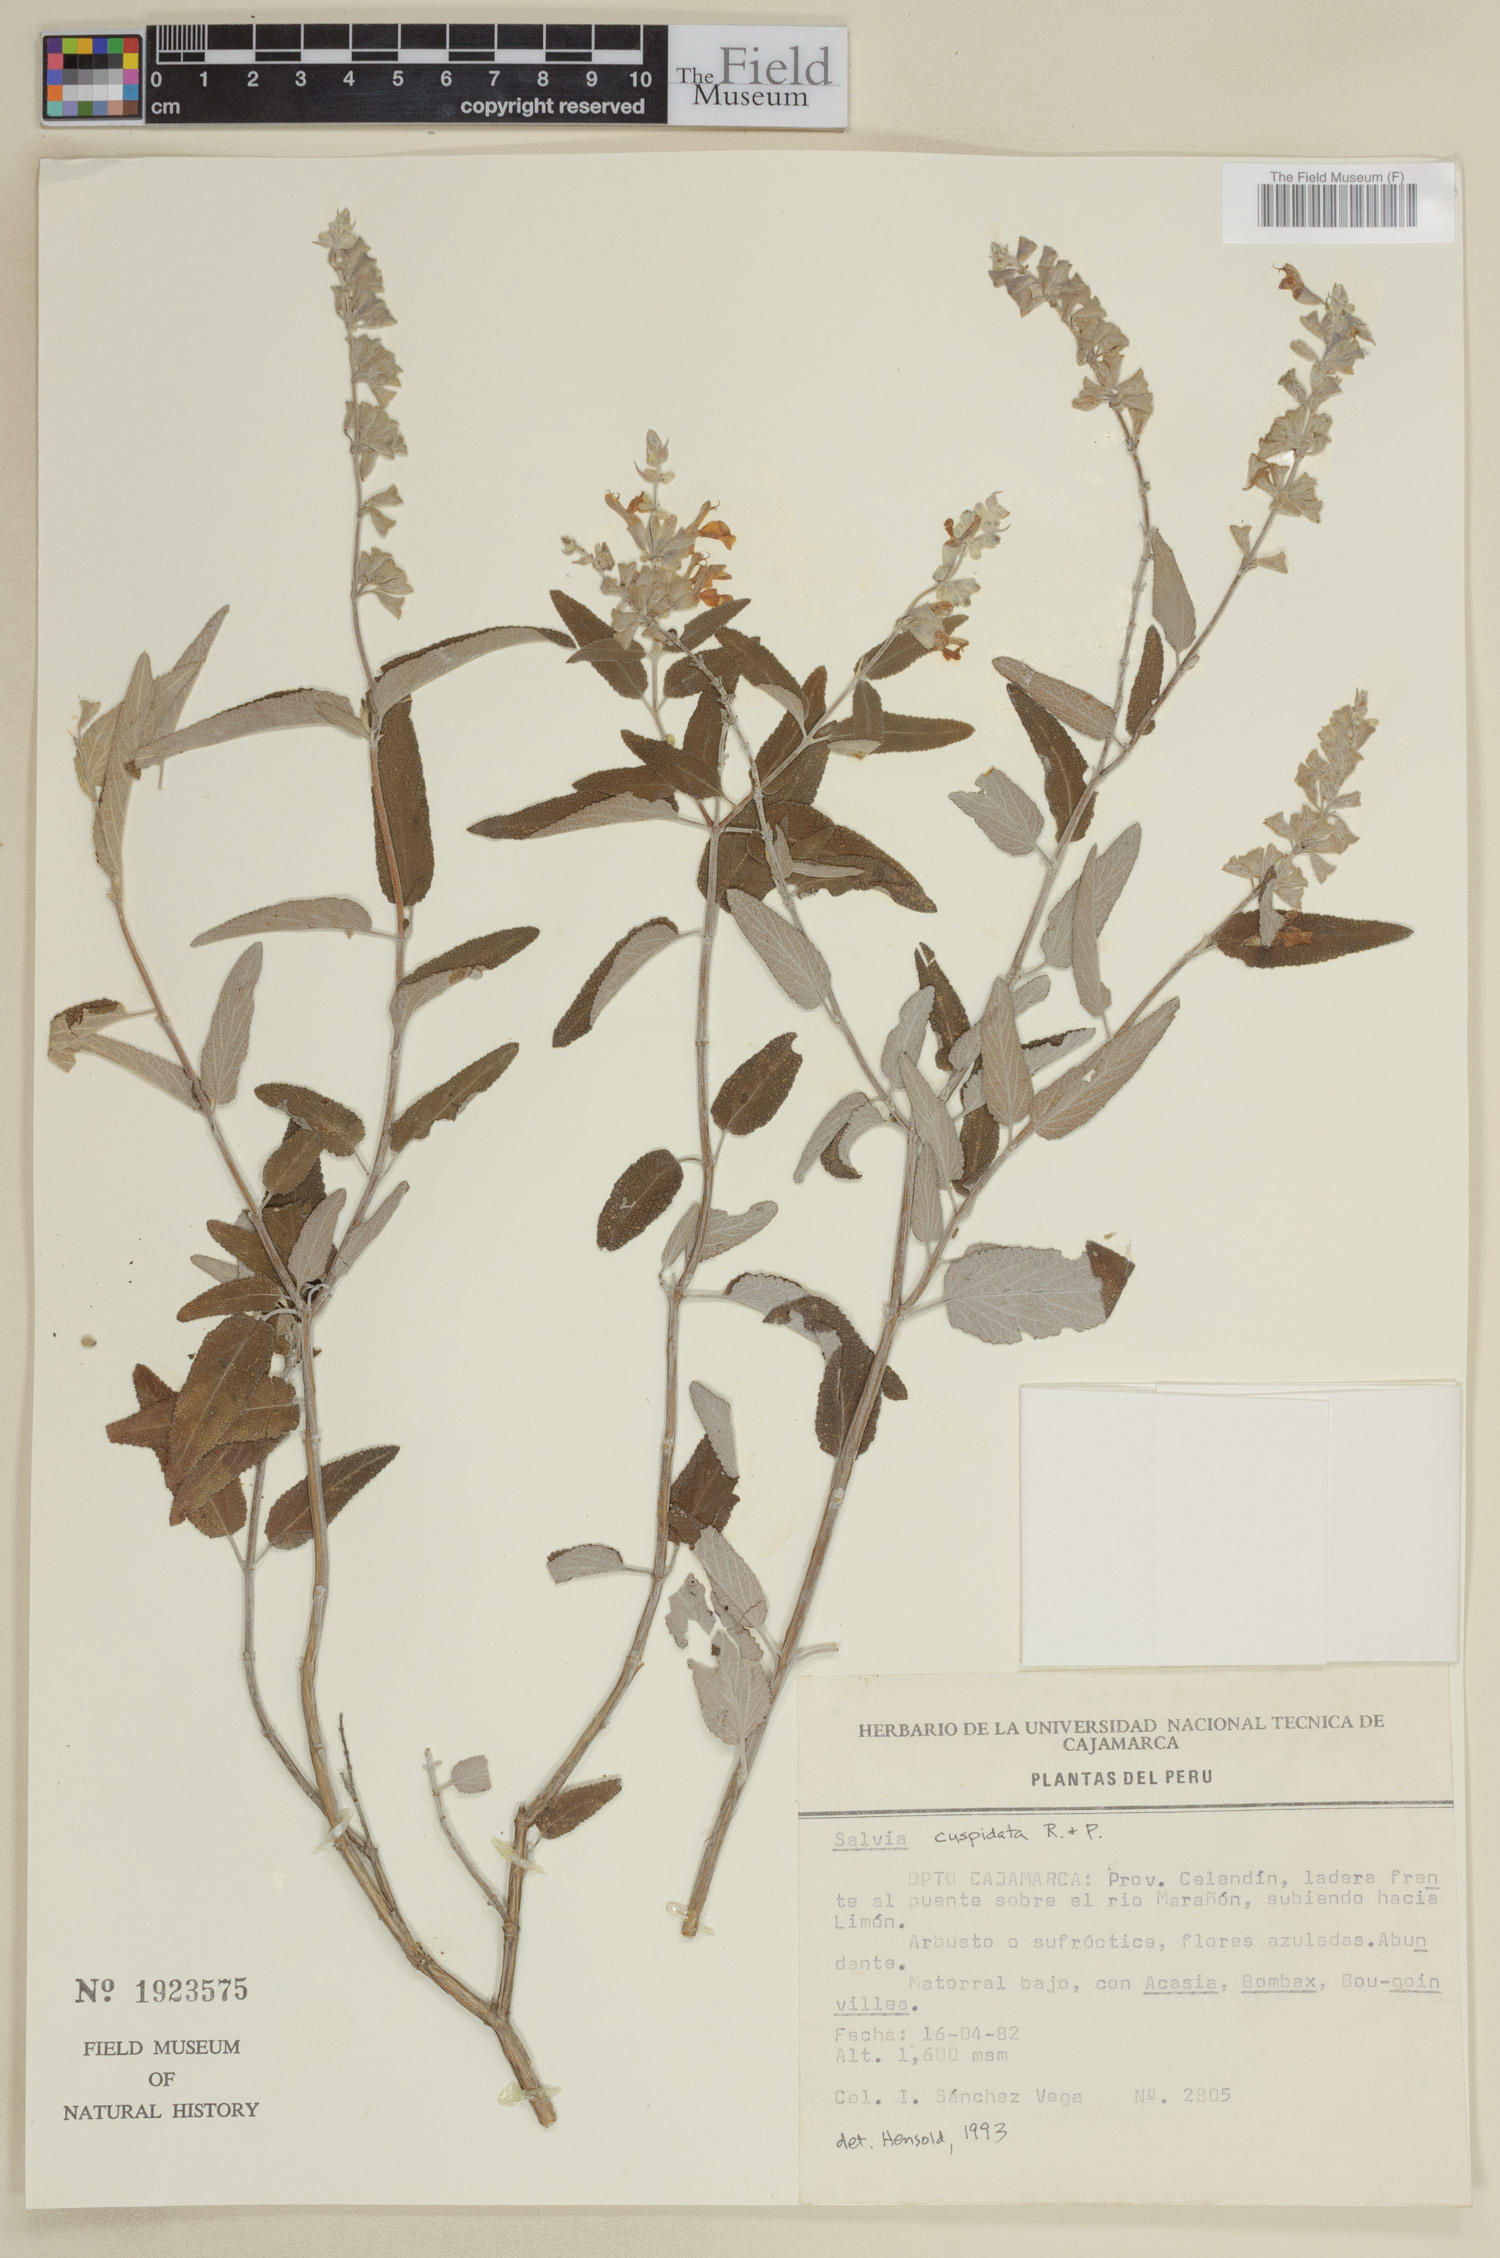 Salvia curticalyx image